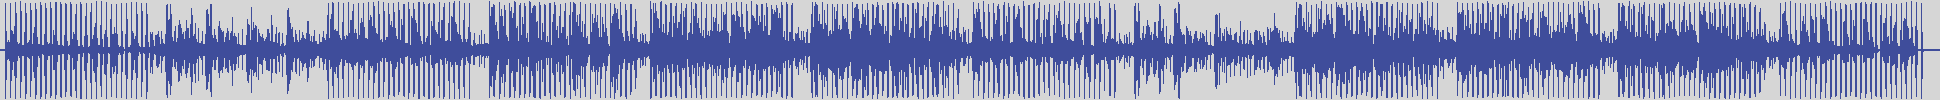 nf_boyz_records [NFY060] Robert Farrein - New Organisms [Angelique Mix] audio wave form